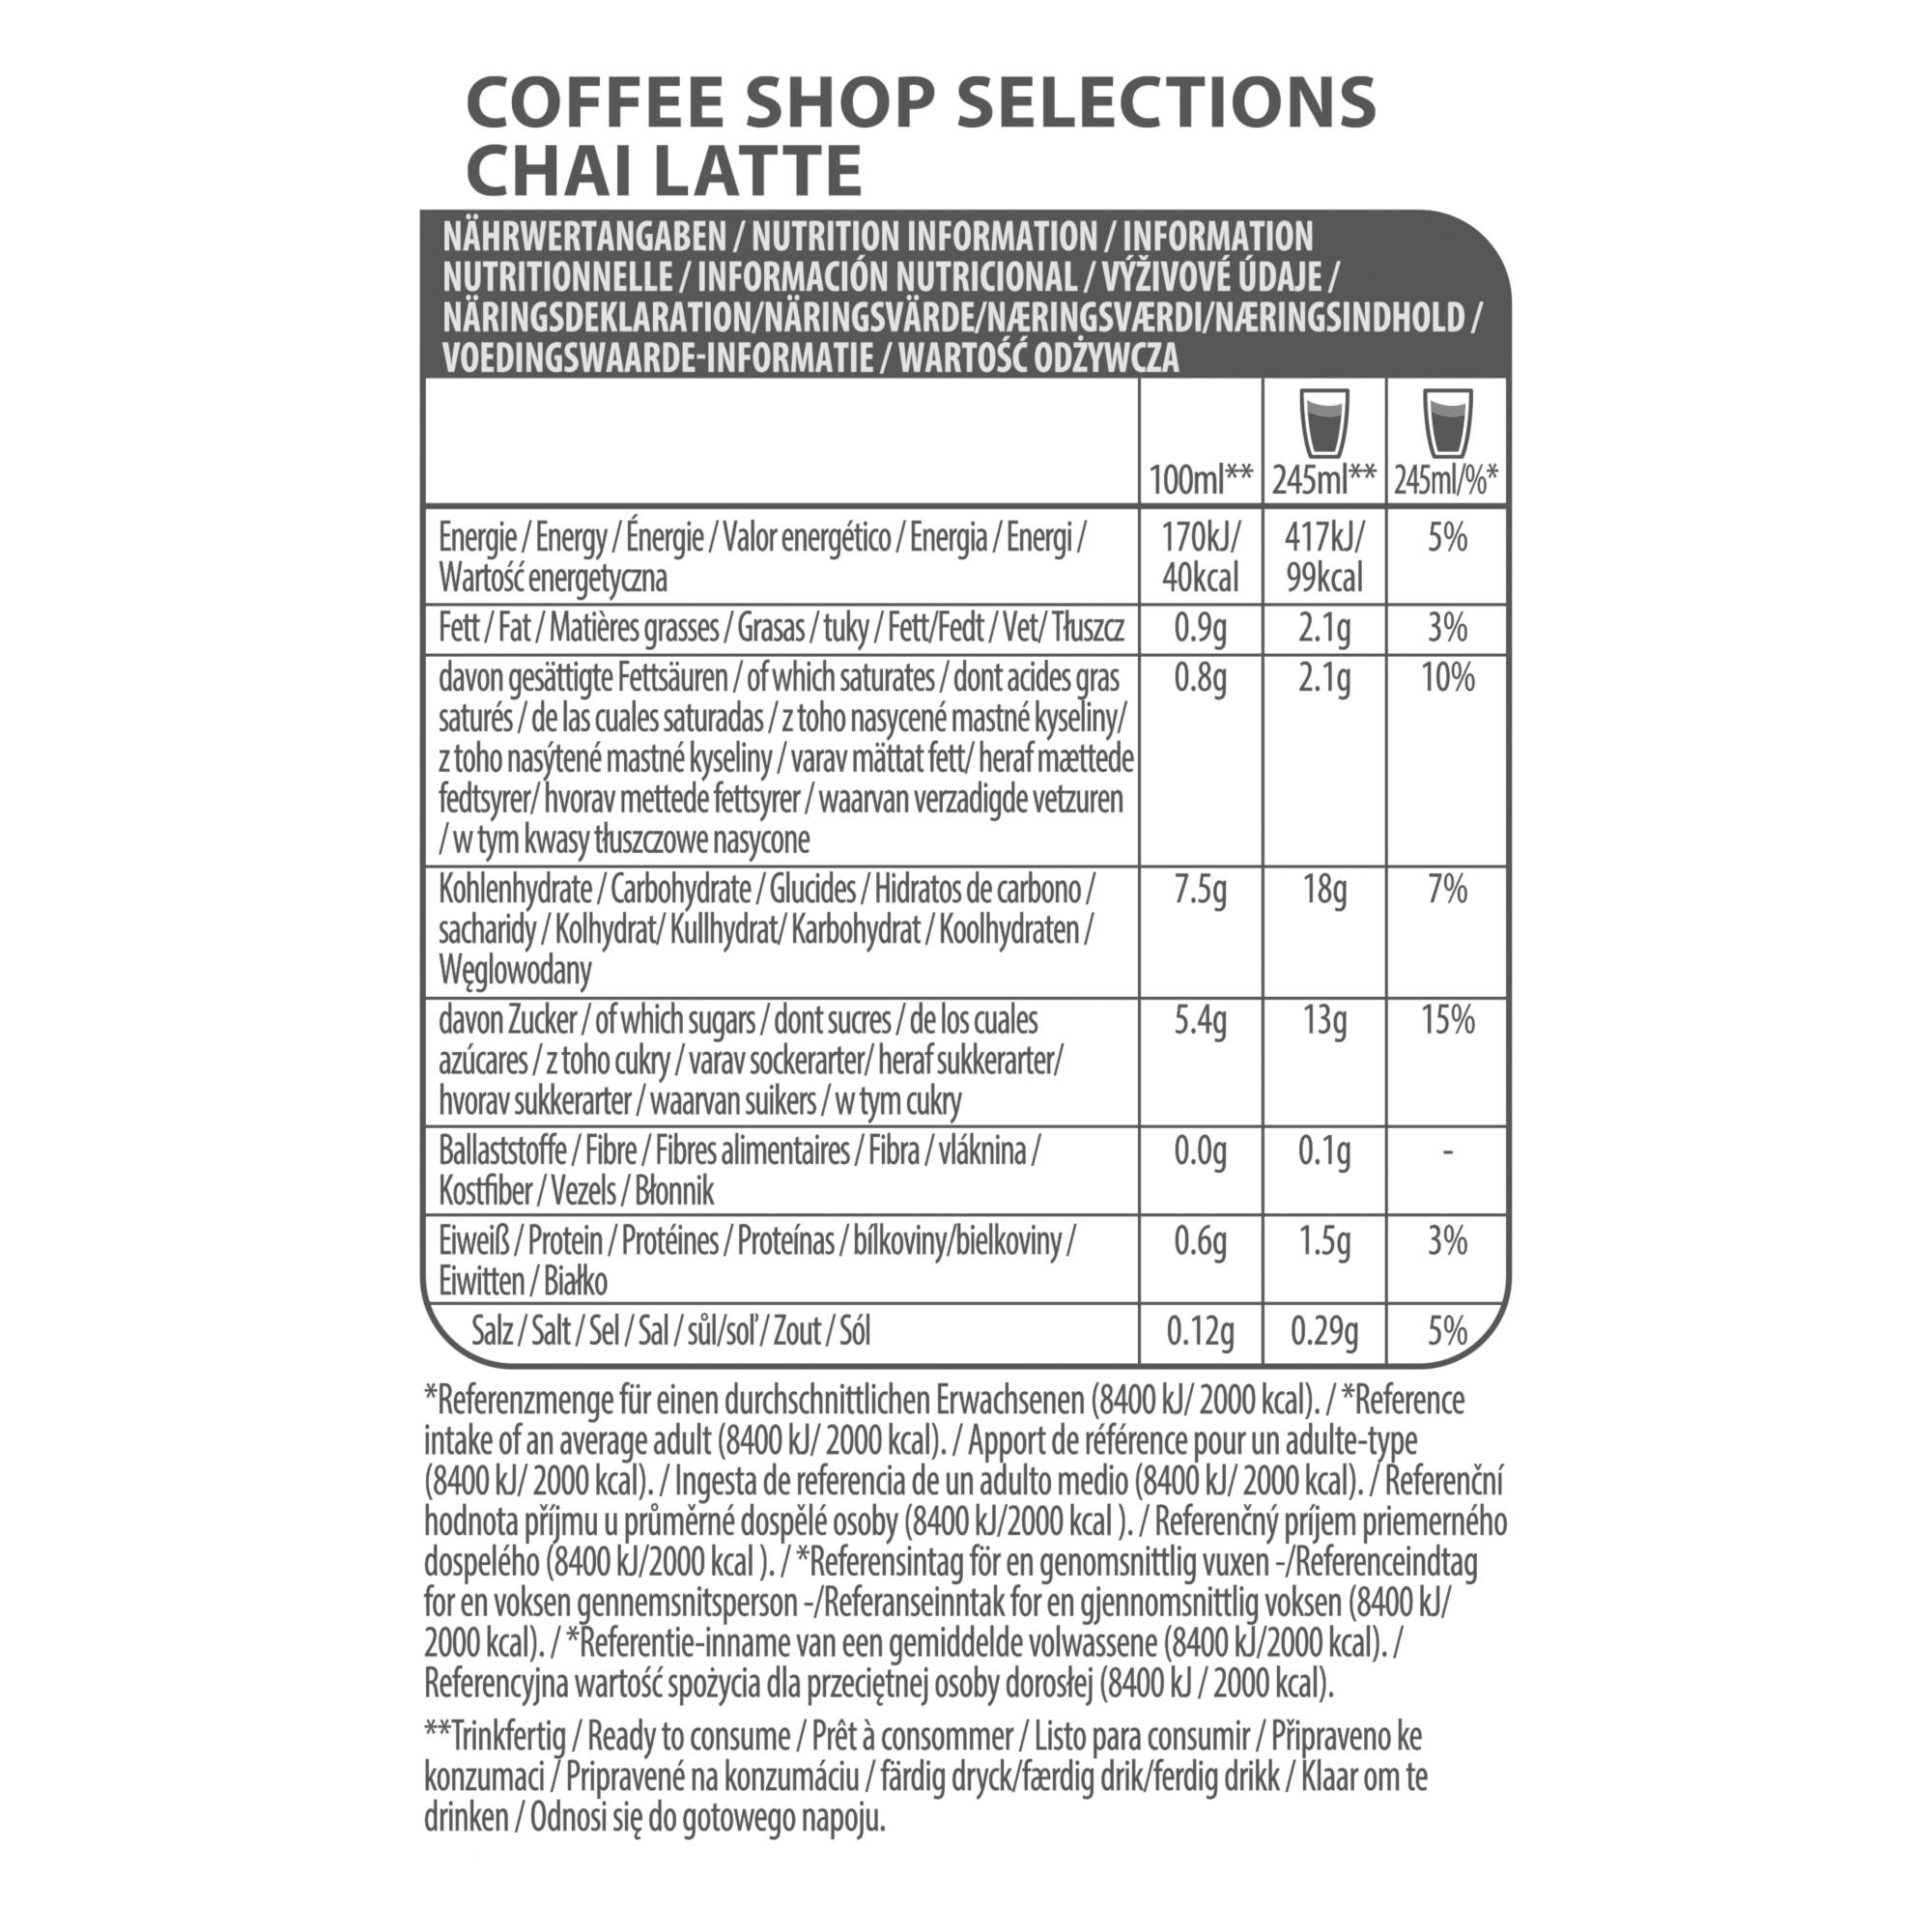 x Teekapseln Kapseln System)) (T-Disc Latte Selections 5 Getränke Maschine Coffee Tee 8 Shop TASSIMO Chai T (Tassimo Disc